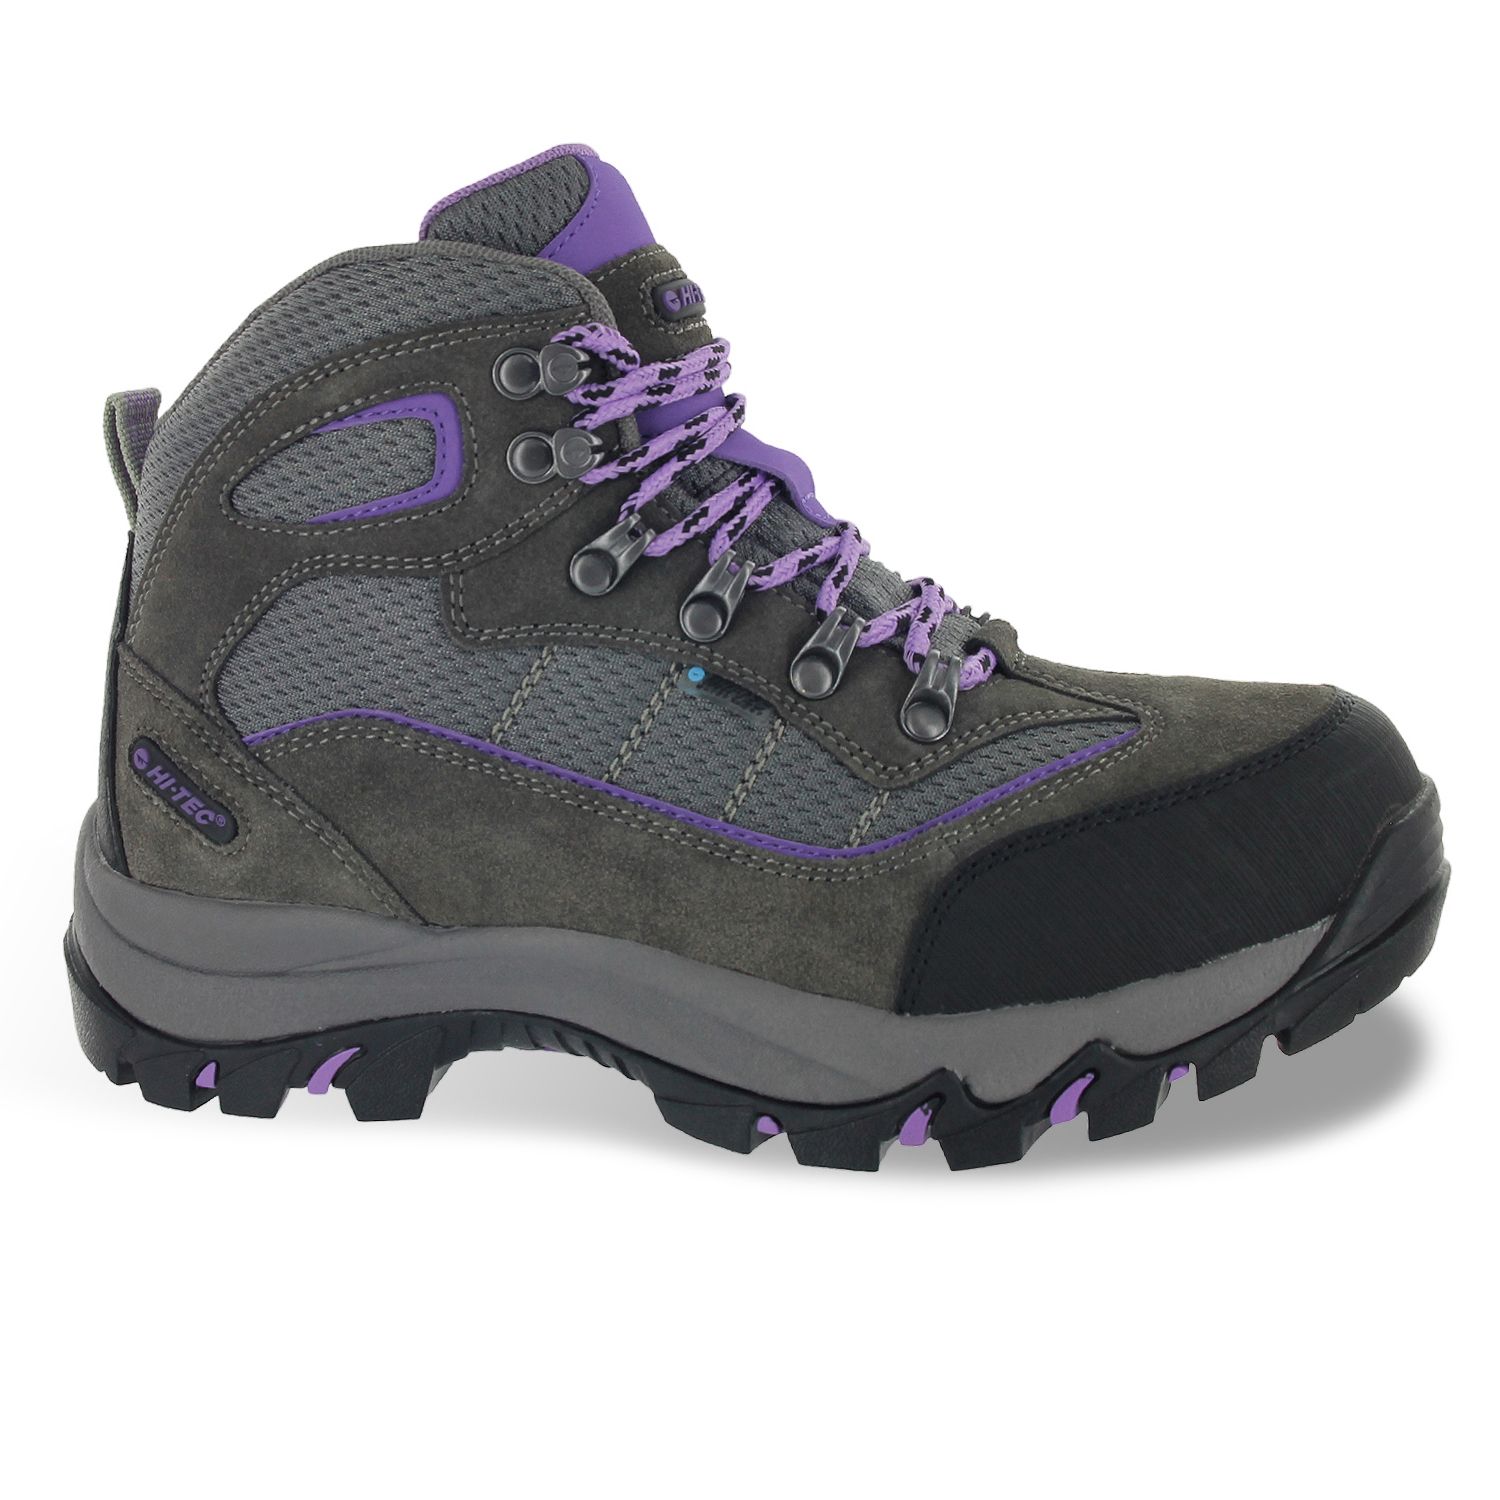 hi tec women's waterproof hiking boots